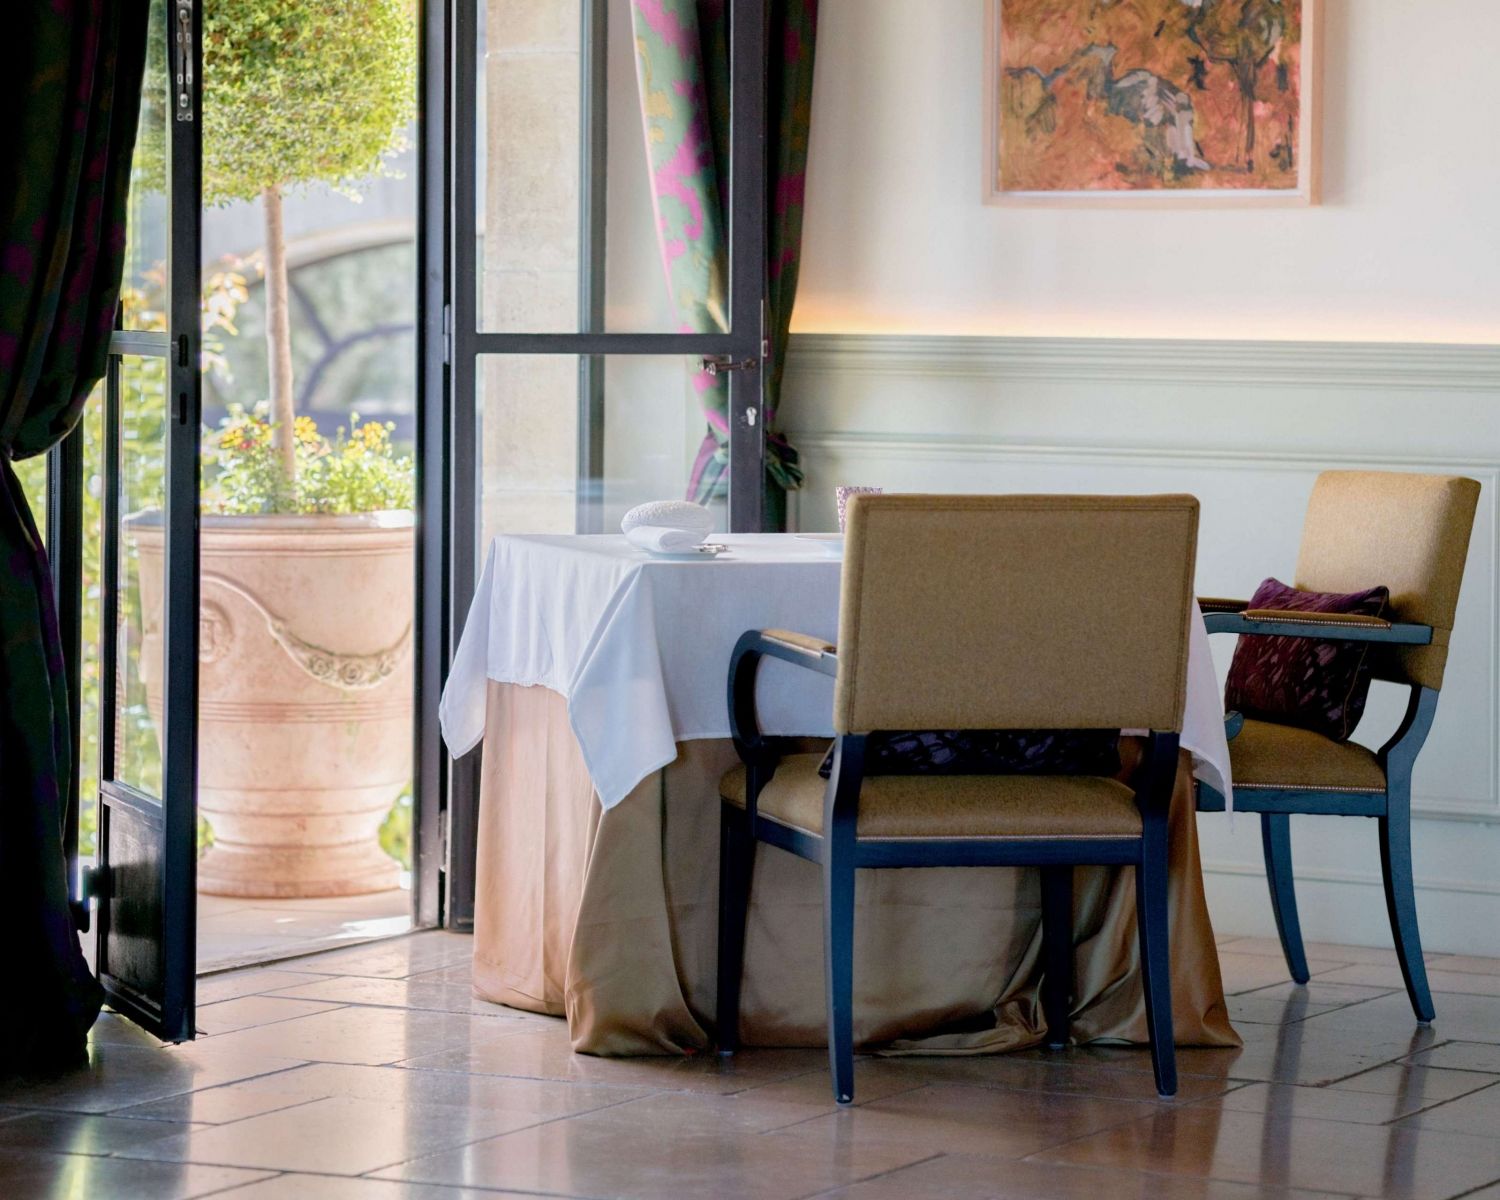 avelan gourmet restaurant, Coquillade Provence 5-star hotel in the Luberon, Gargas